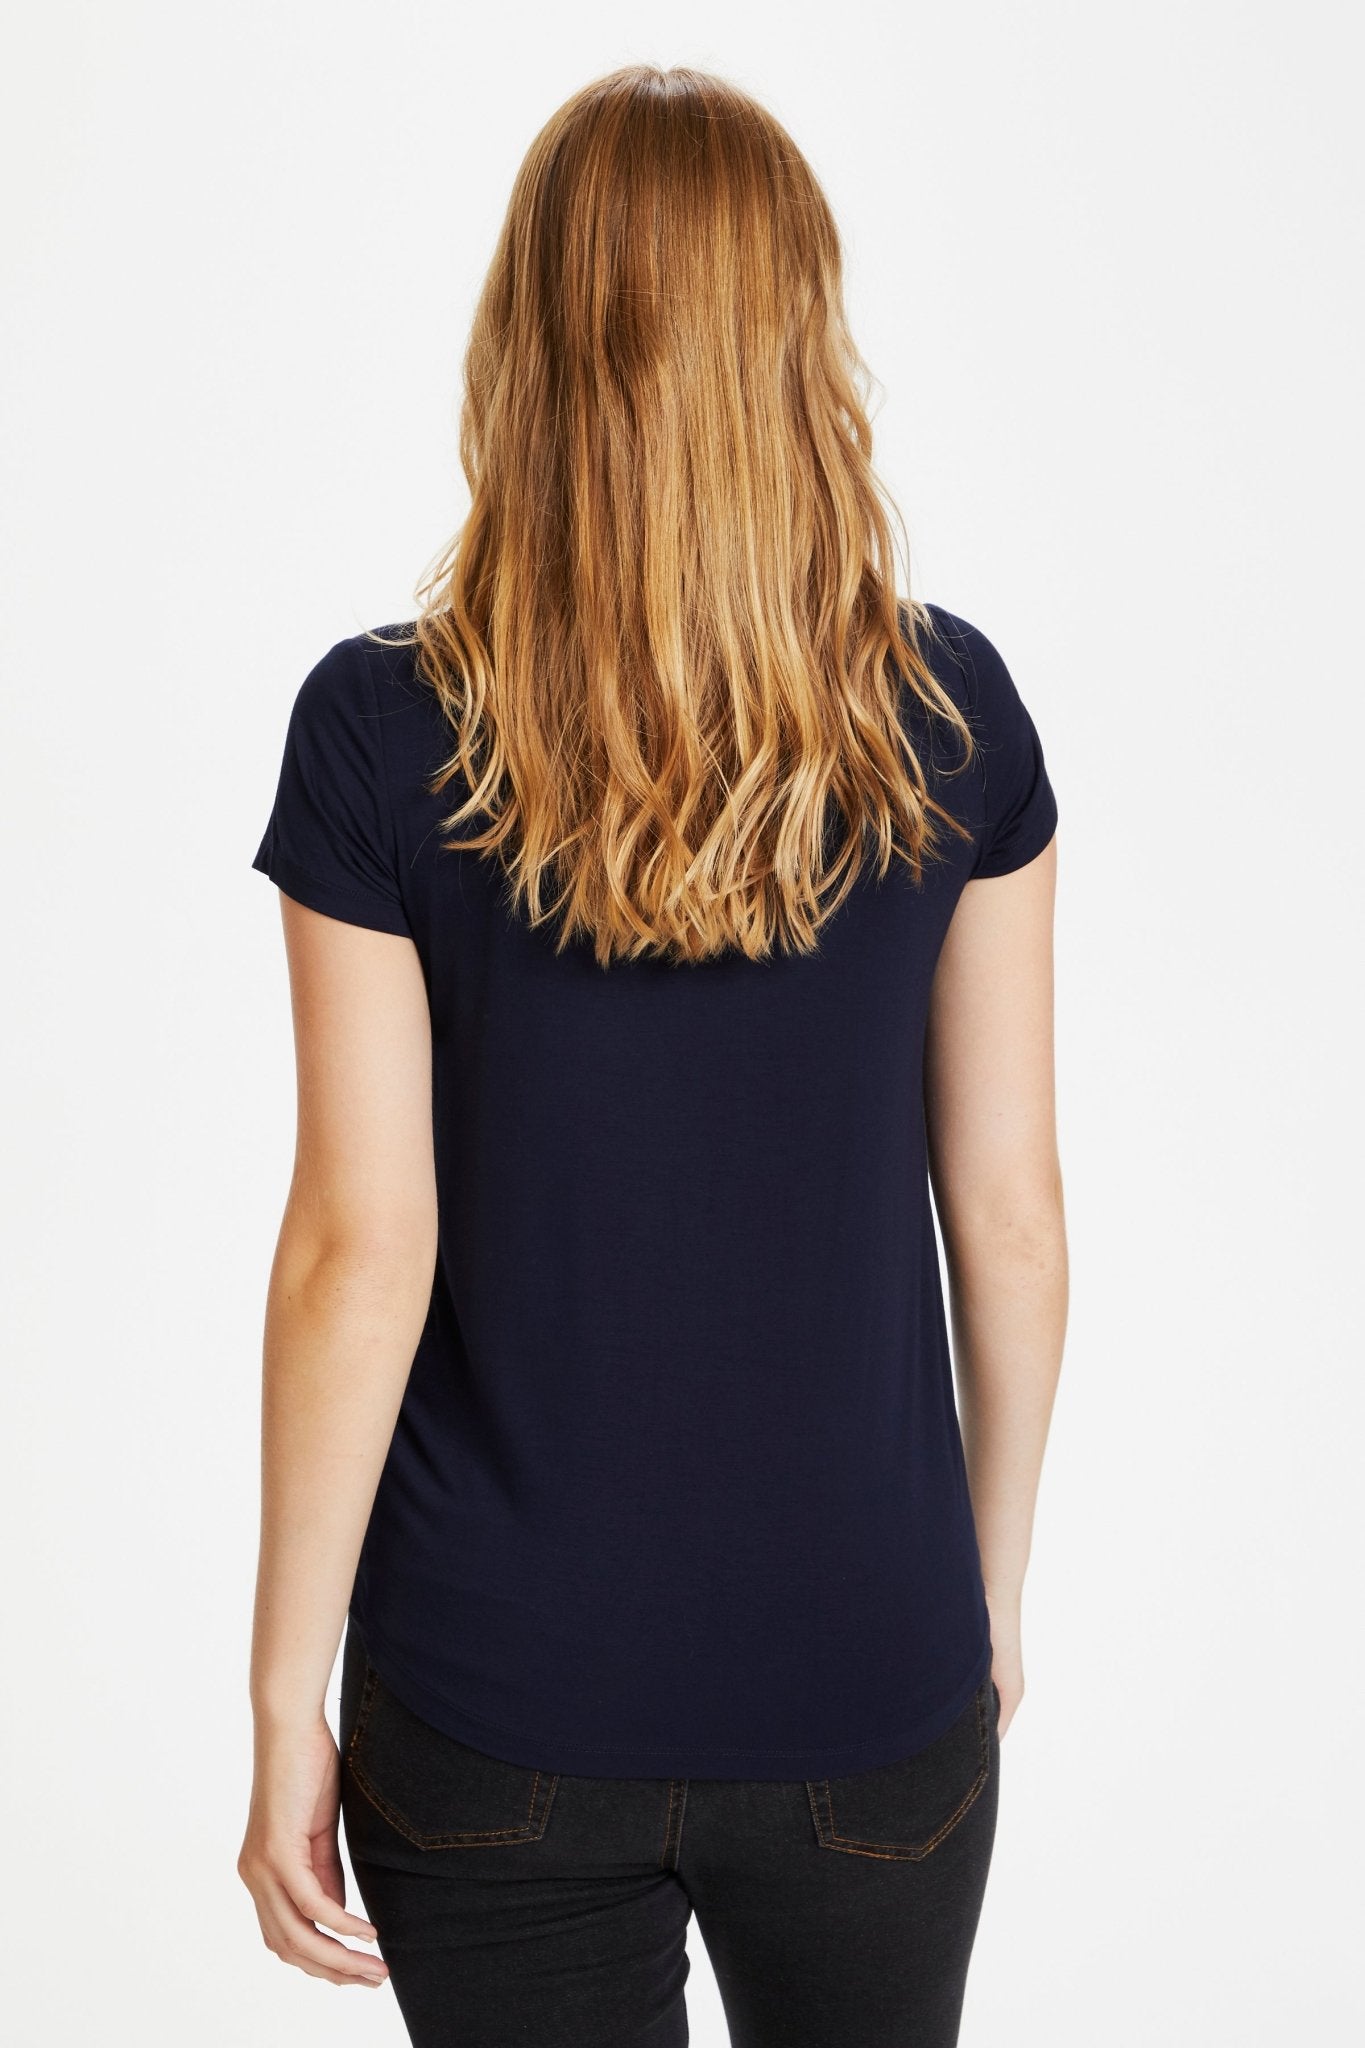 Poppy V-neck T-shirt by Culture - navy - Blue Sky Fashions & Lingerie